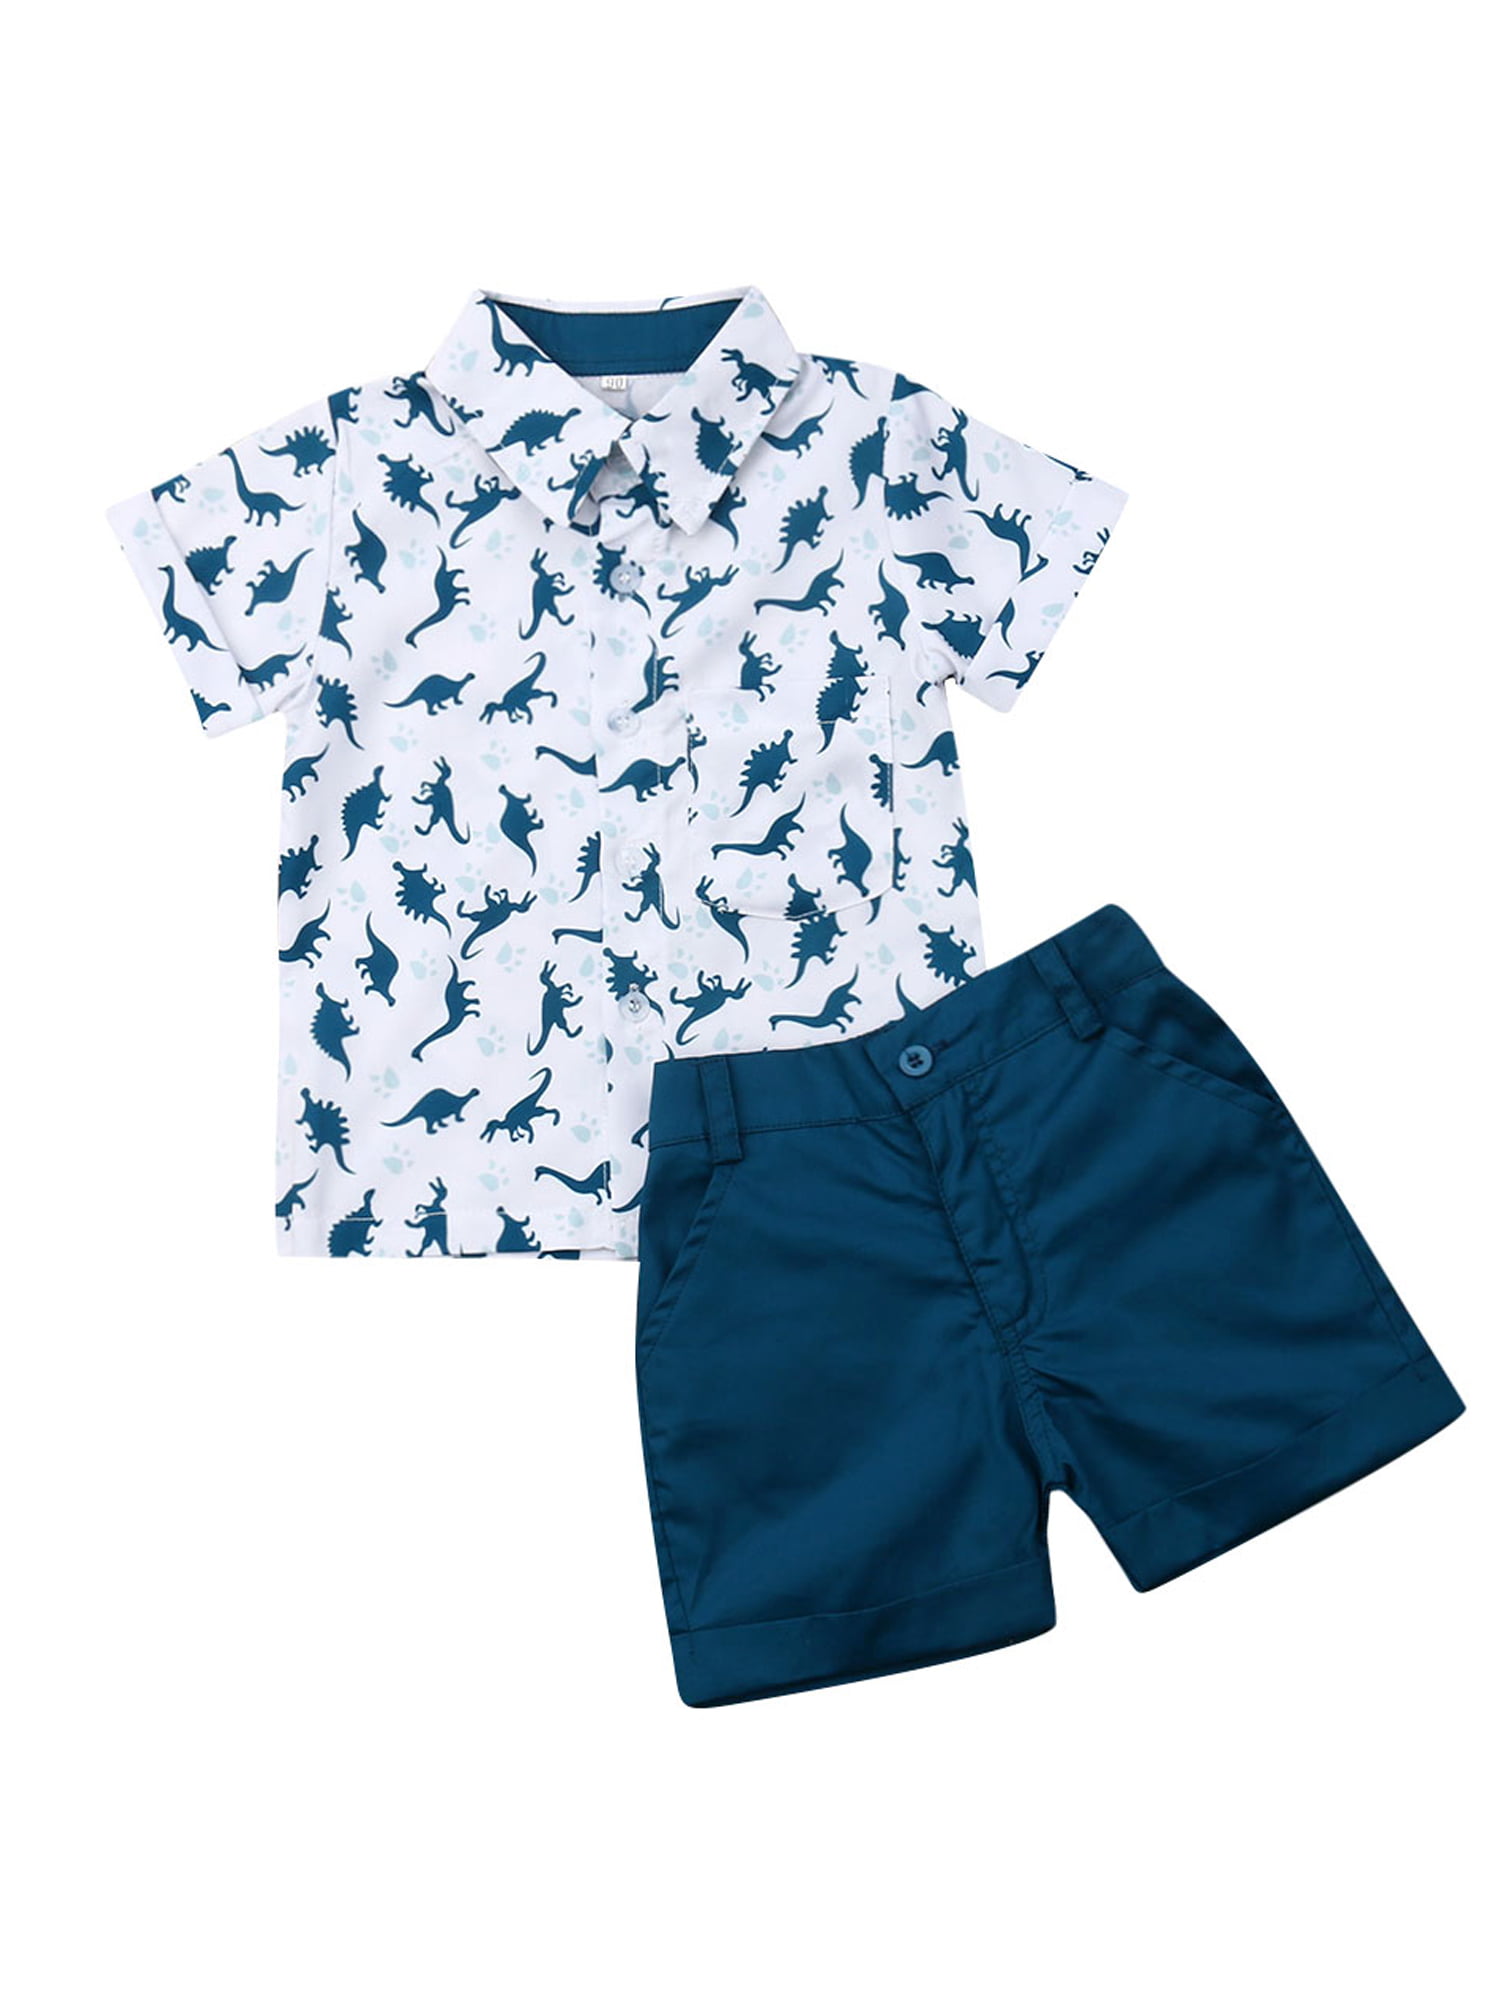 Toddler Boys Short Sleeve Outfit Kids Flamingo Printed Shirts+Shorts Set Costume 